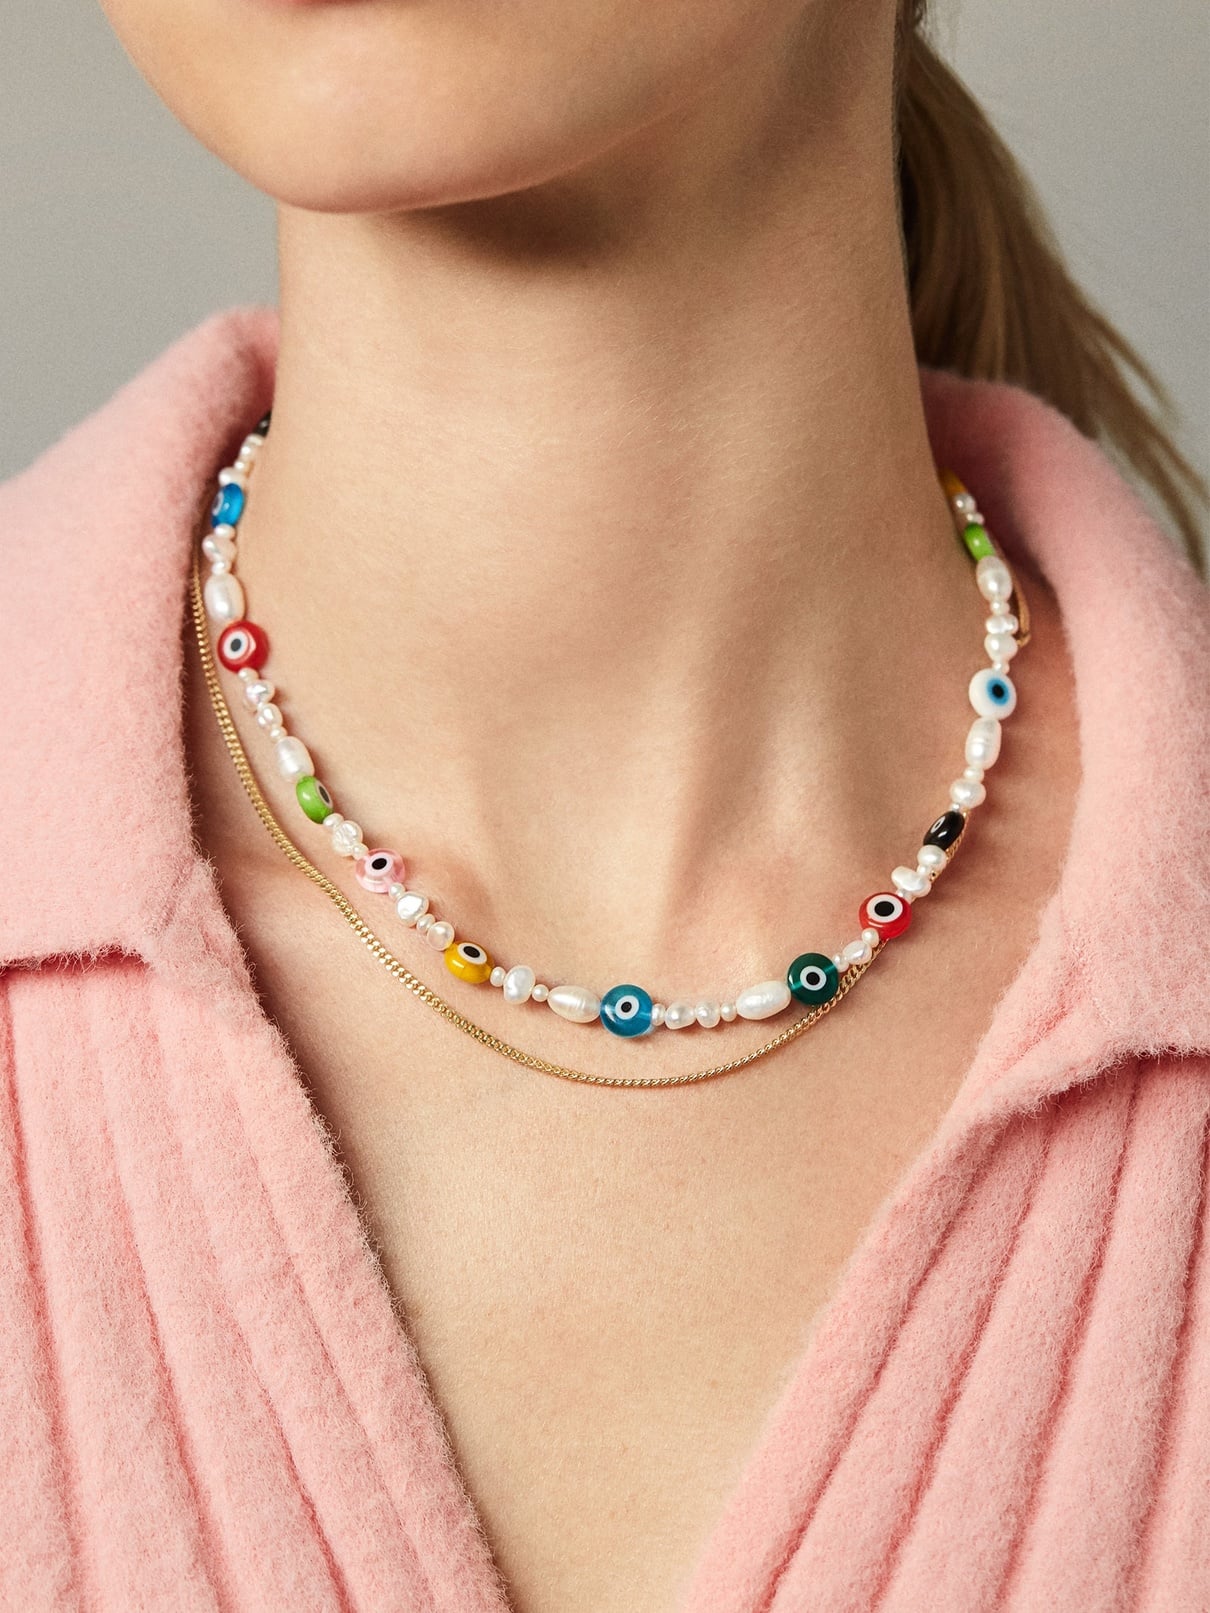 Gemstone Chip Necklaces - Buy Gemstone Jewellery Online UK